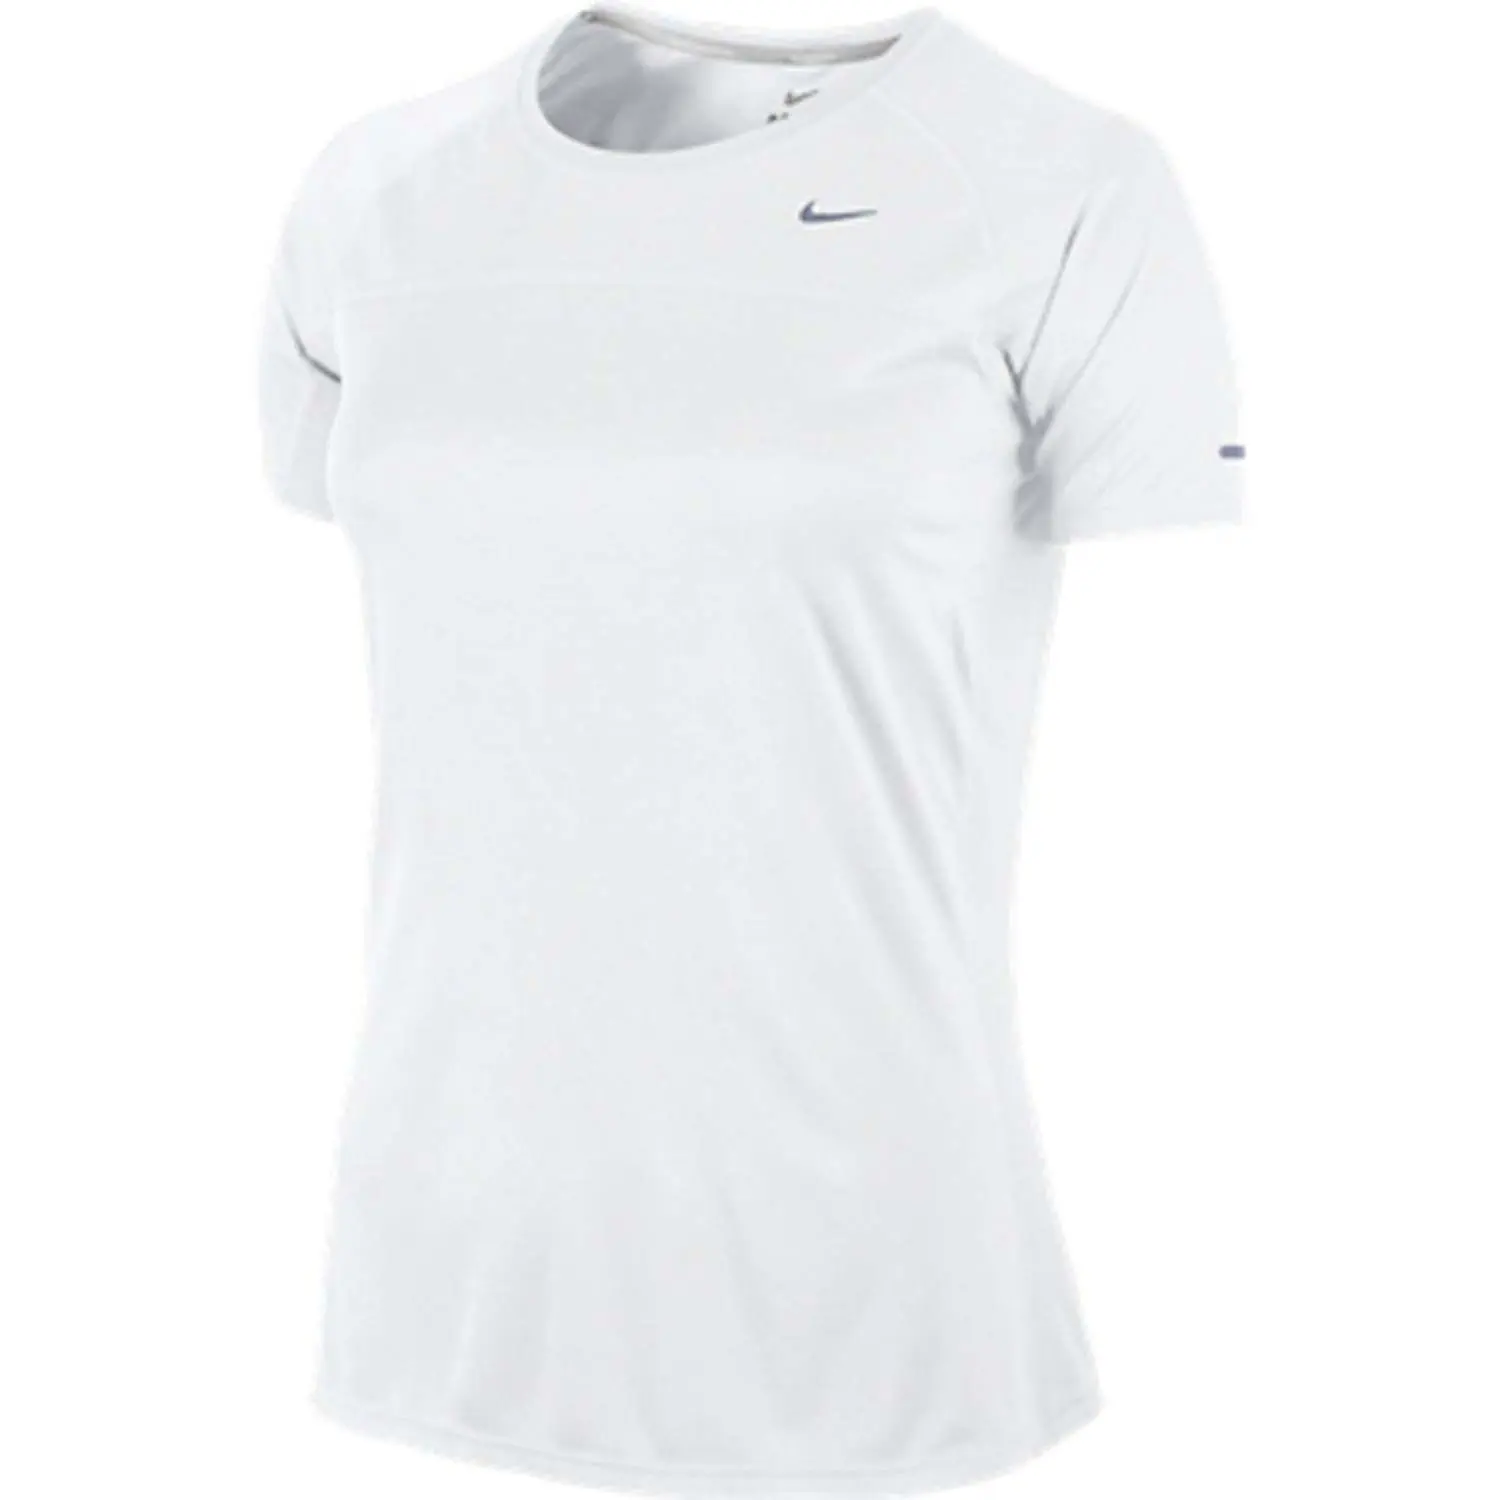 white nike shirt for women